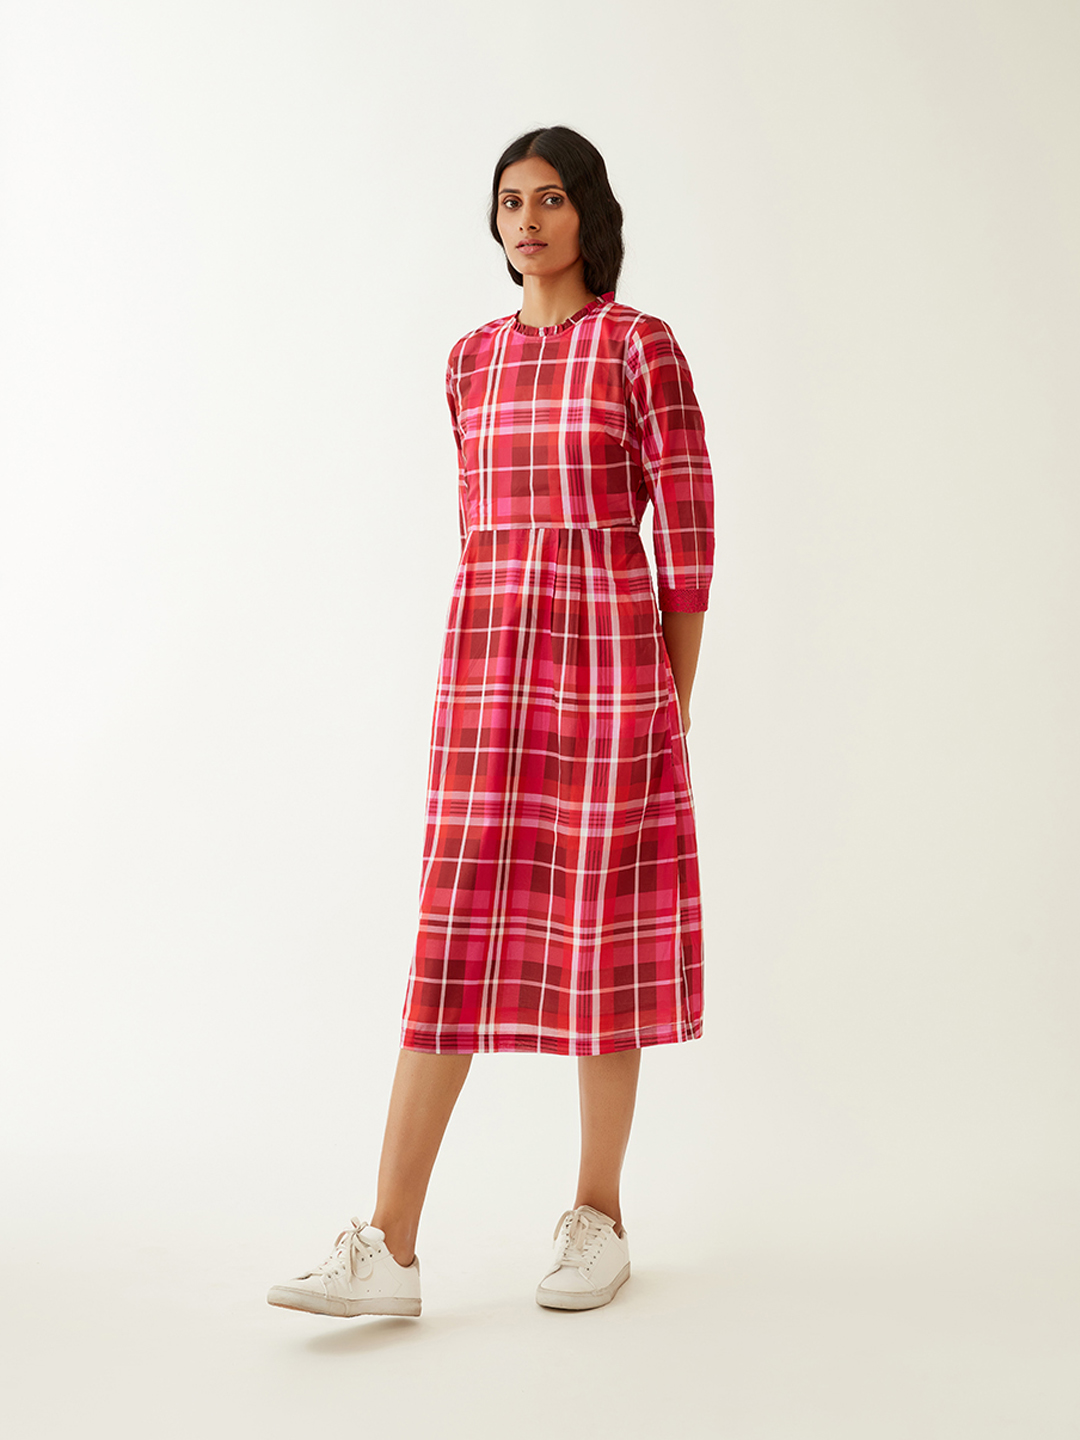 Buy Kia Fit & Flare Dress | Latest Dresses for Women Online : Ancestry